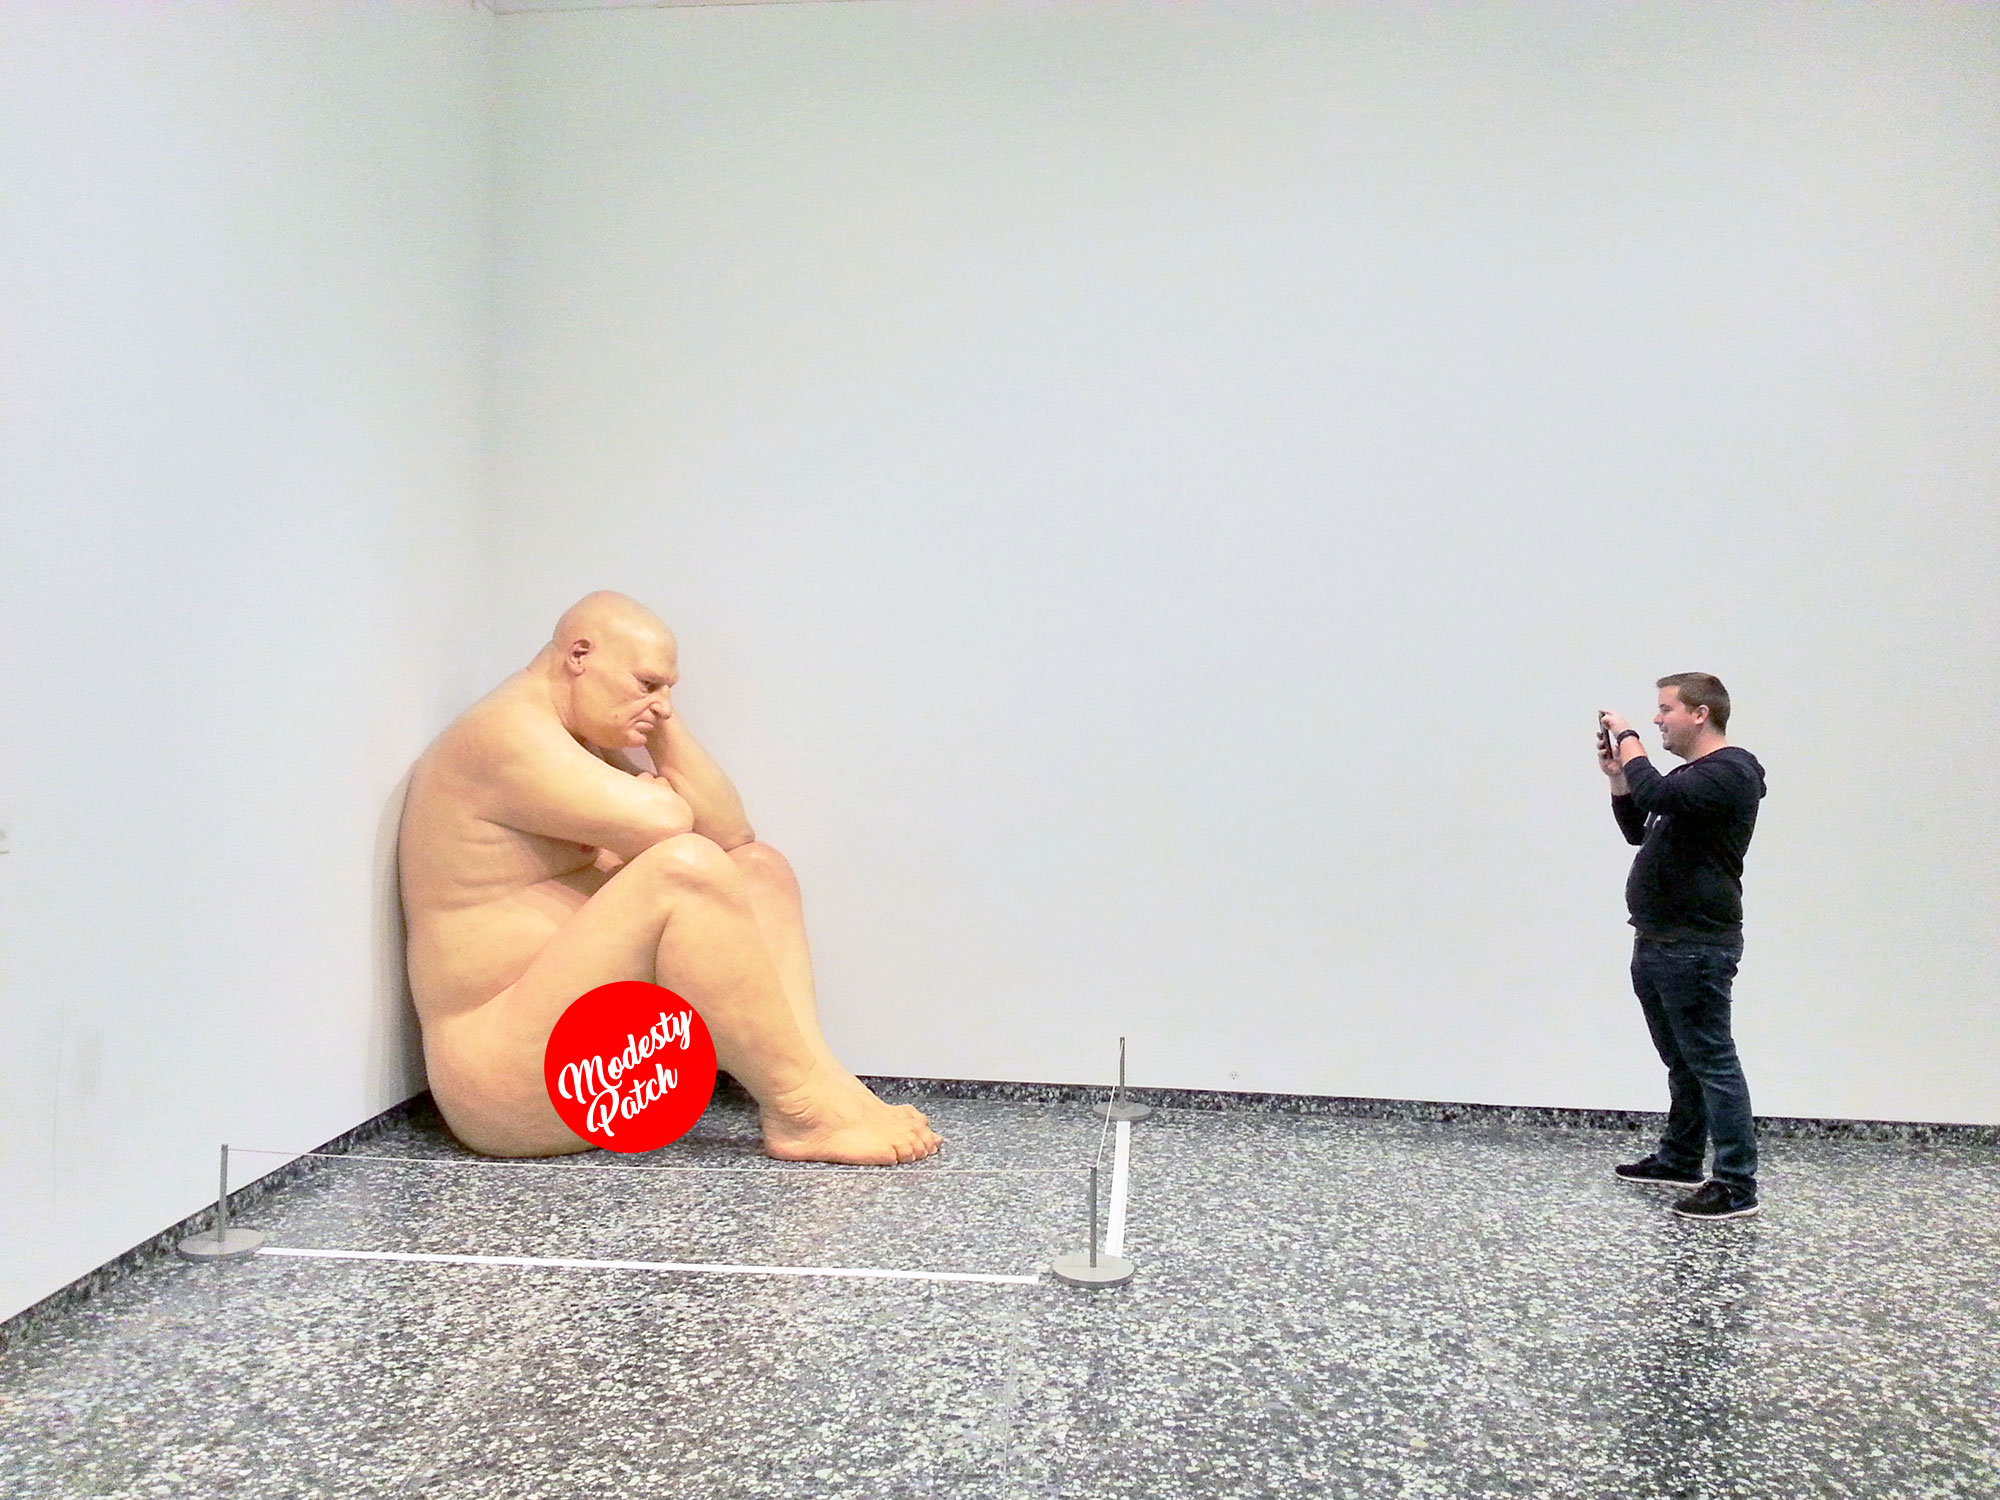 Ron Mueck's "Big Man" sculpture at the Hirshhorn Museum and Sculpture Garden in Washington D.C.